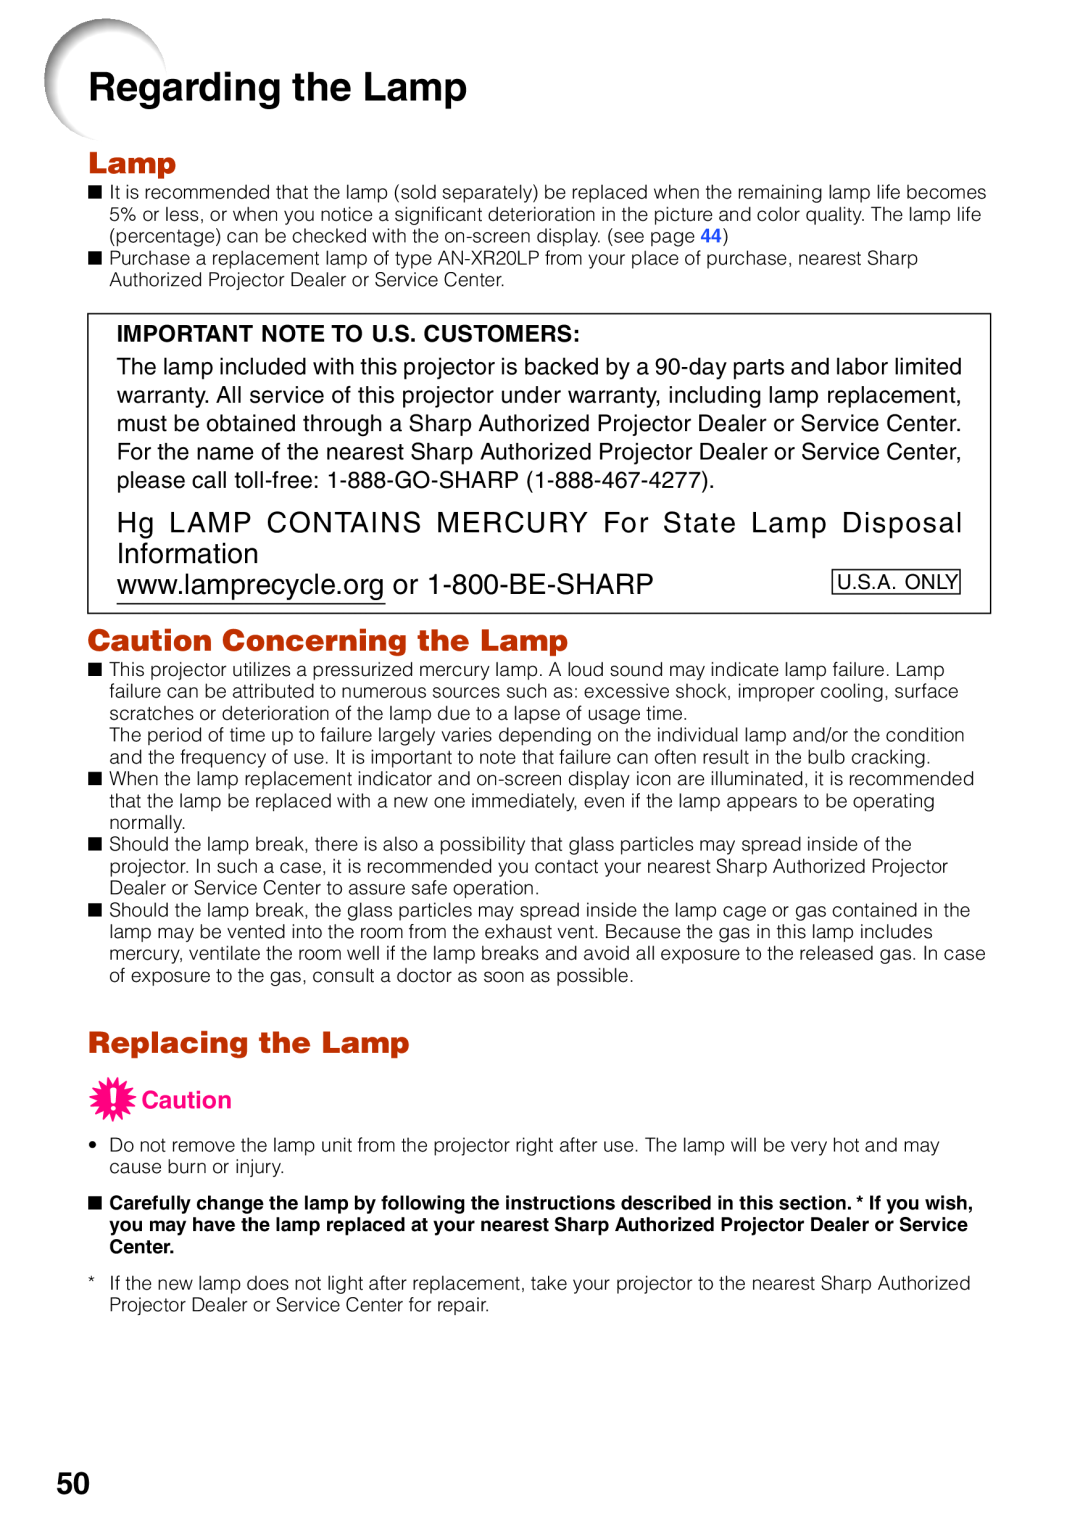 Sharp XG-MB65X Regarding the Lamp, Hg LAMP CONTAINS MERCURY For State Lamp Disposal, Information, Replacing the Lamp 